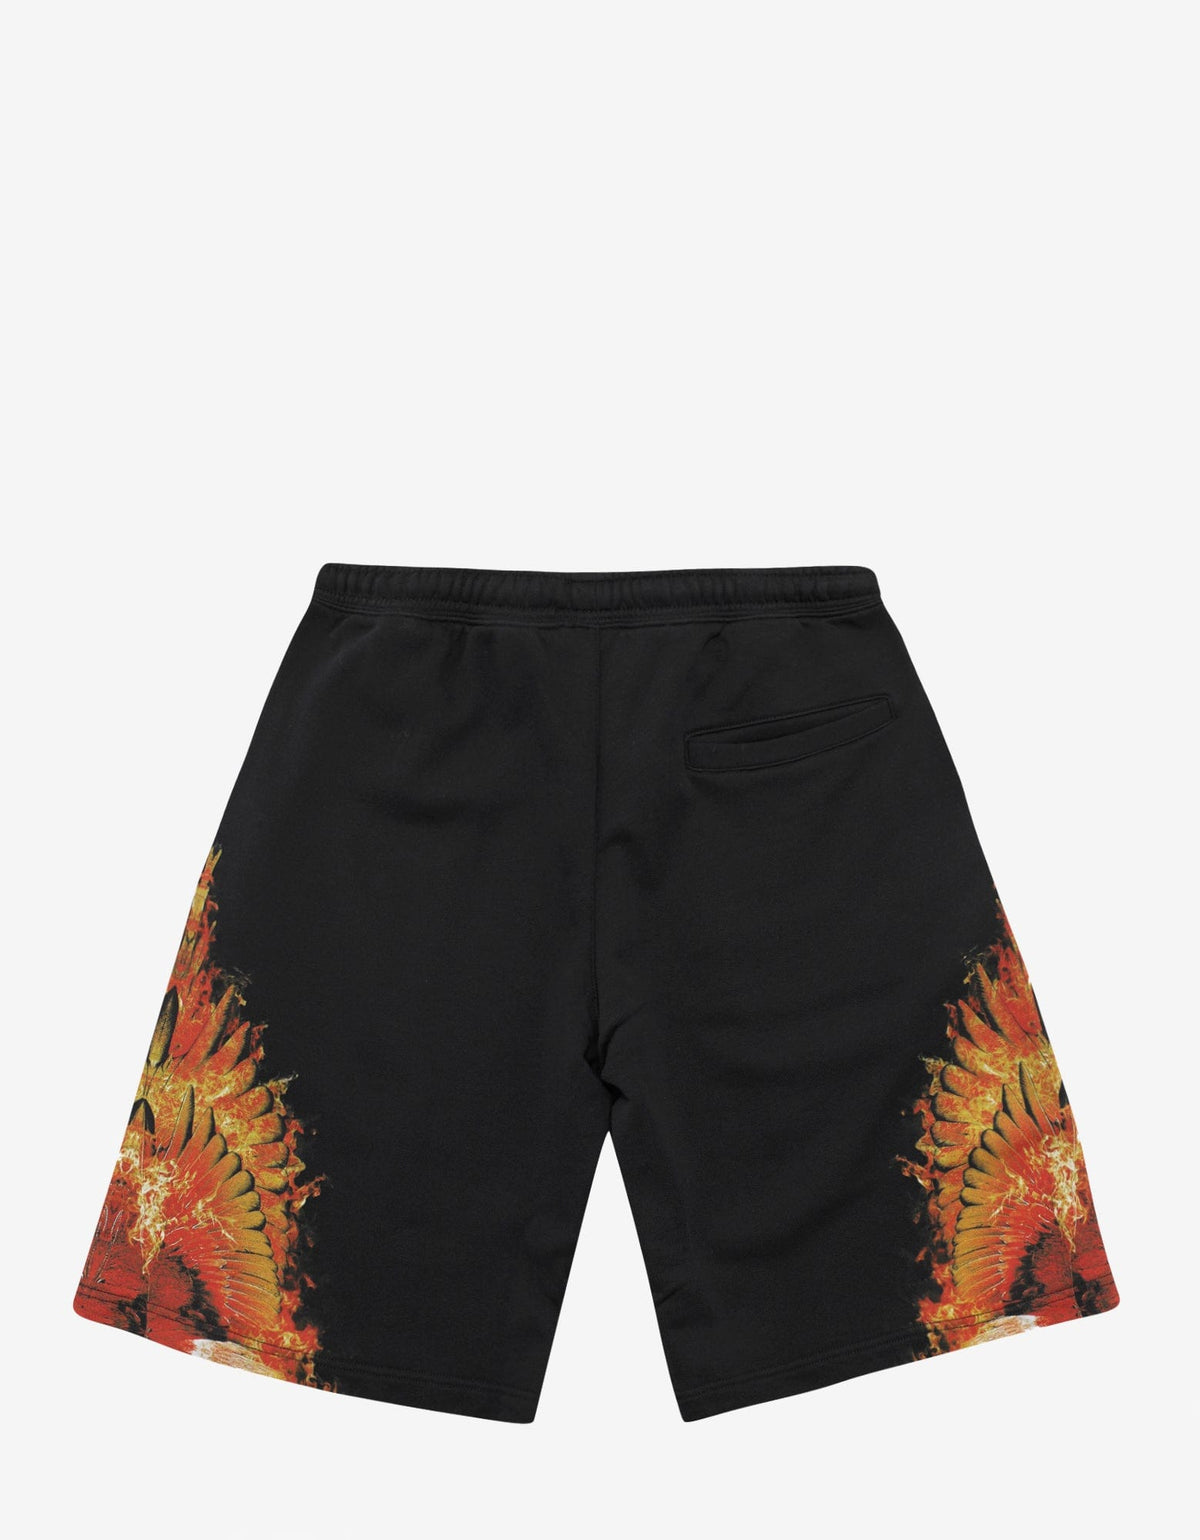 Marcelo Burlon Flame Wing Print Black Sweat Shorts